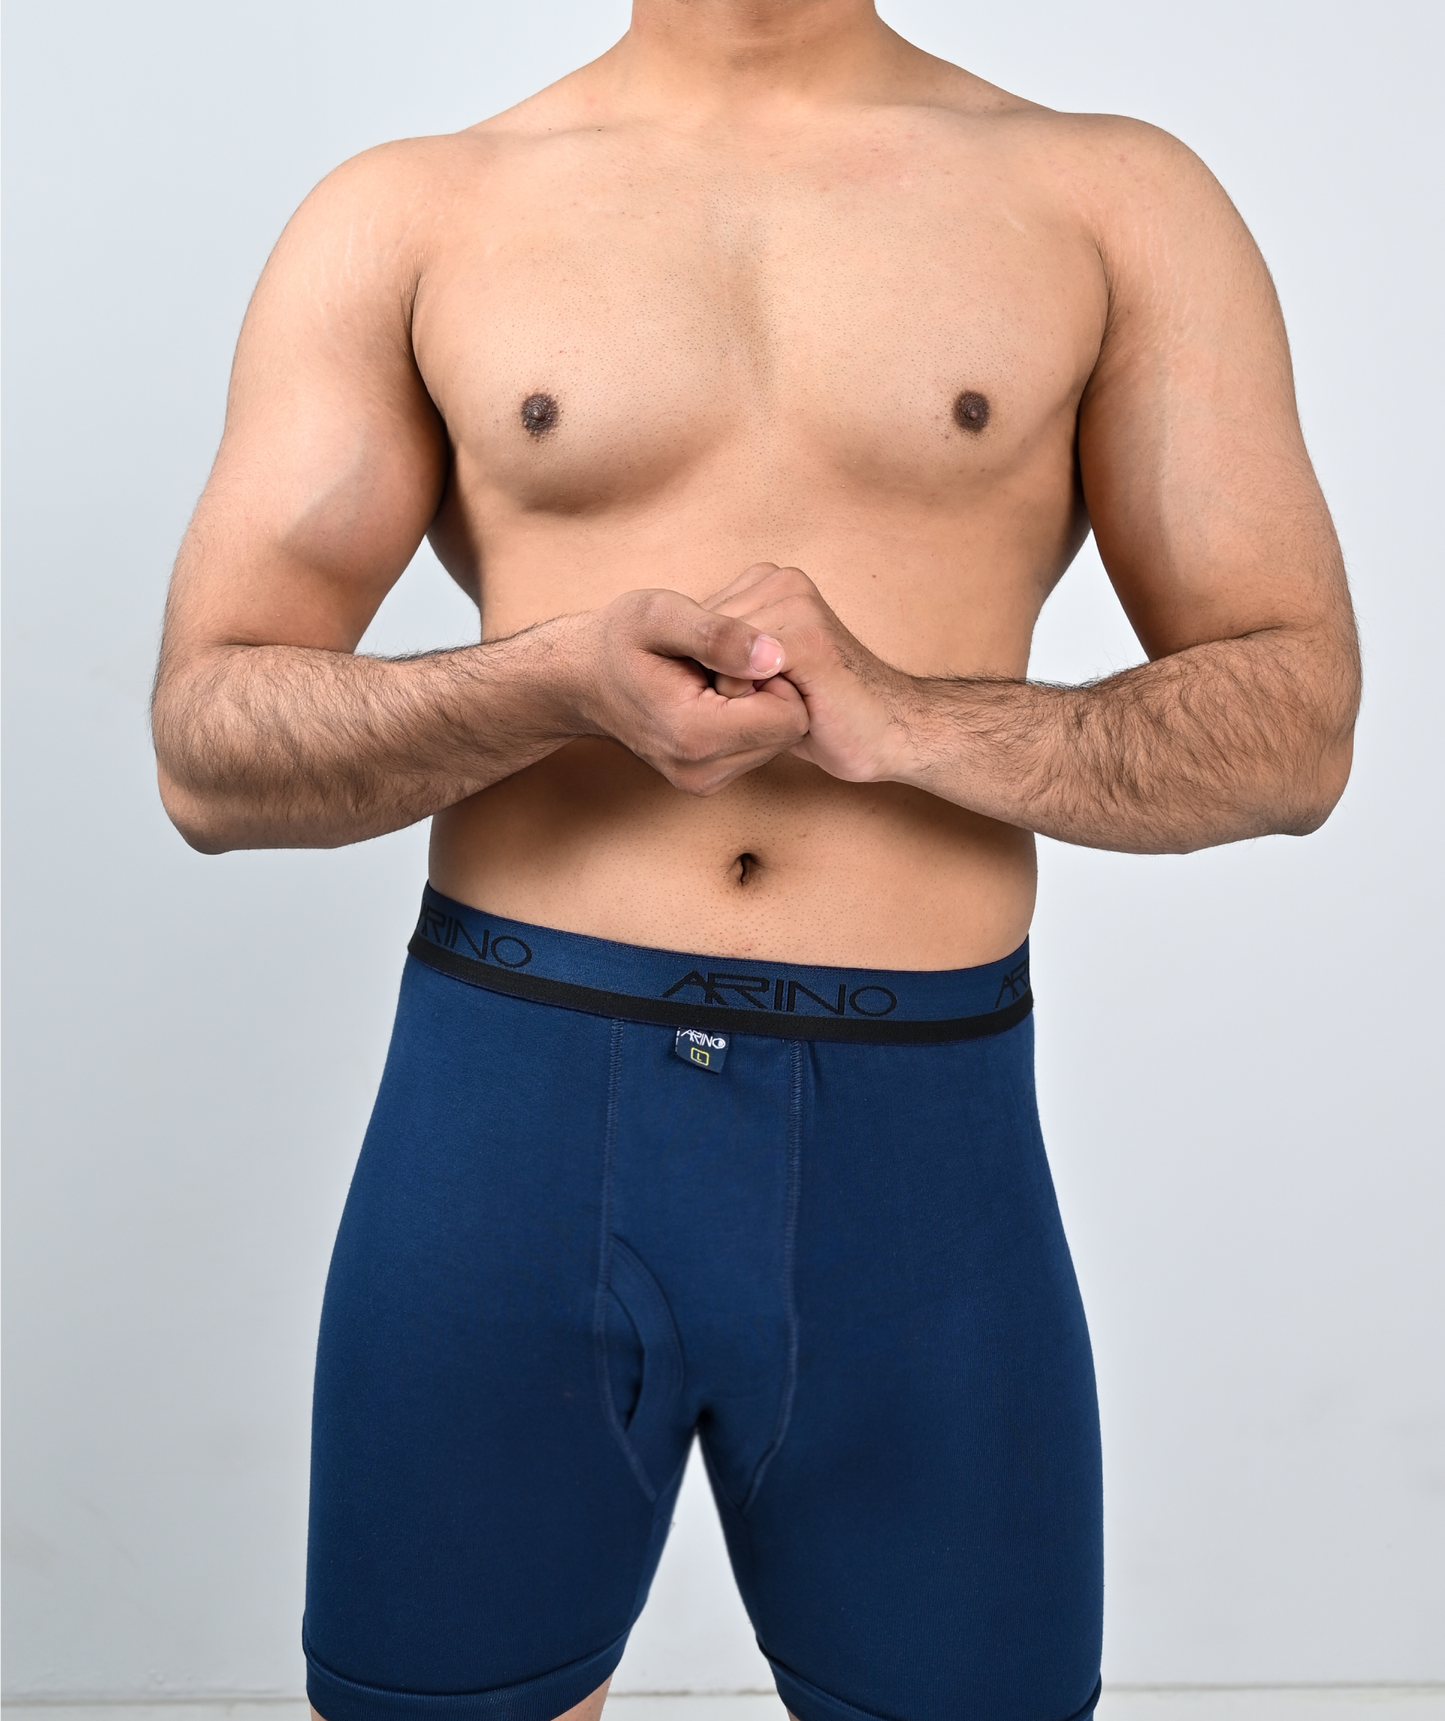 ARINO® Multi Color White Men's Boxer Shorts With Open Elastic (7 Colors)